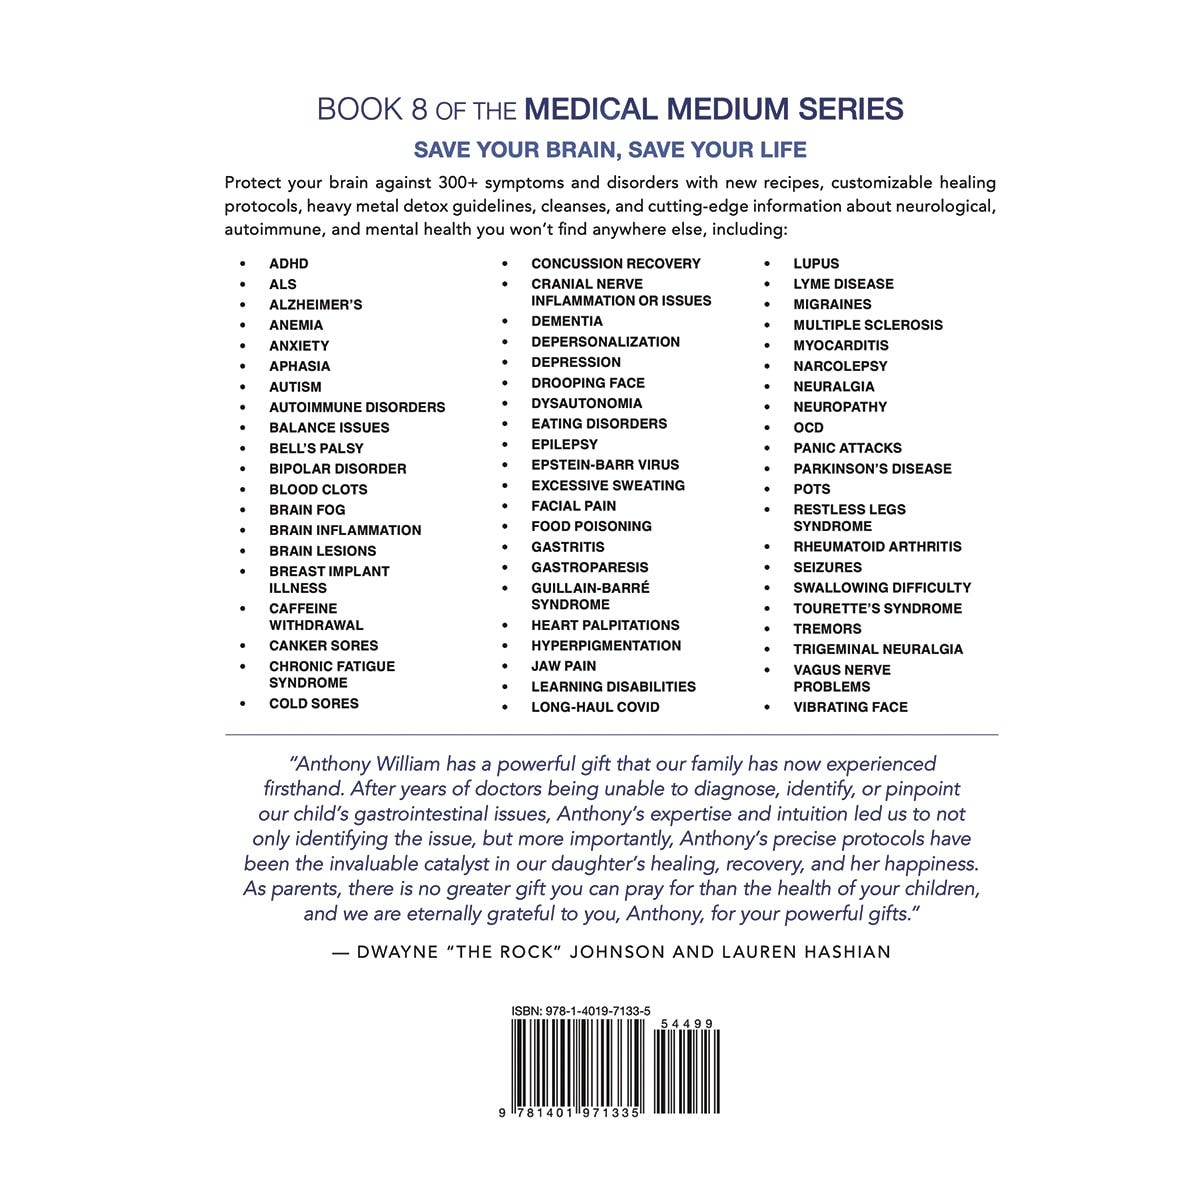 Book Medical Medium Brain Saver Protocols by Anthony William